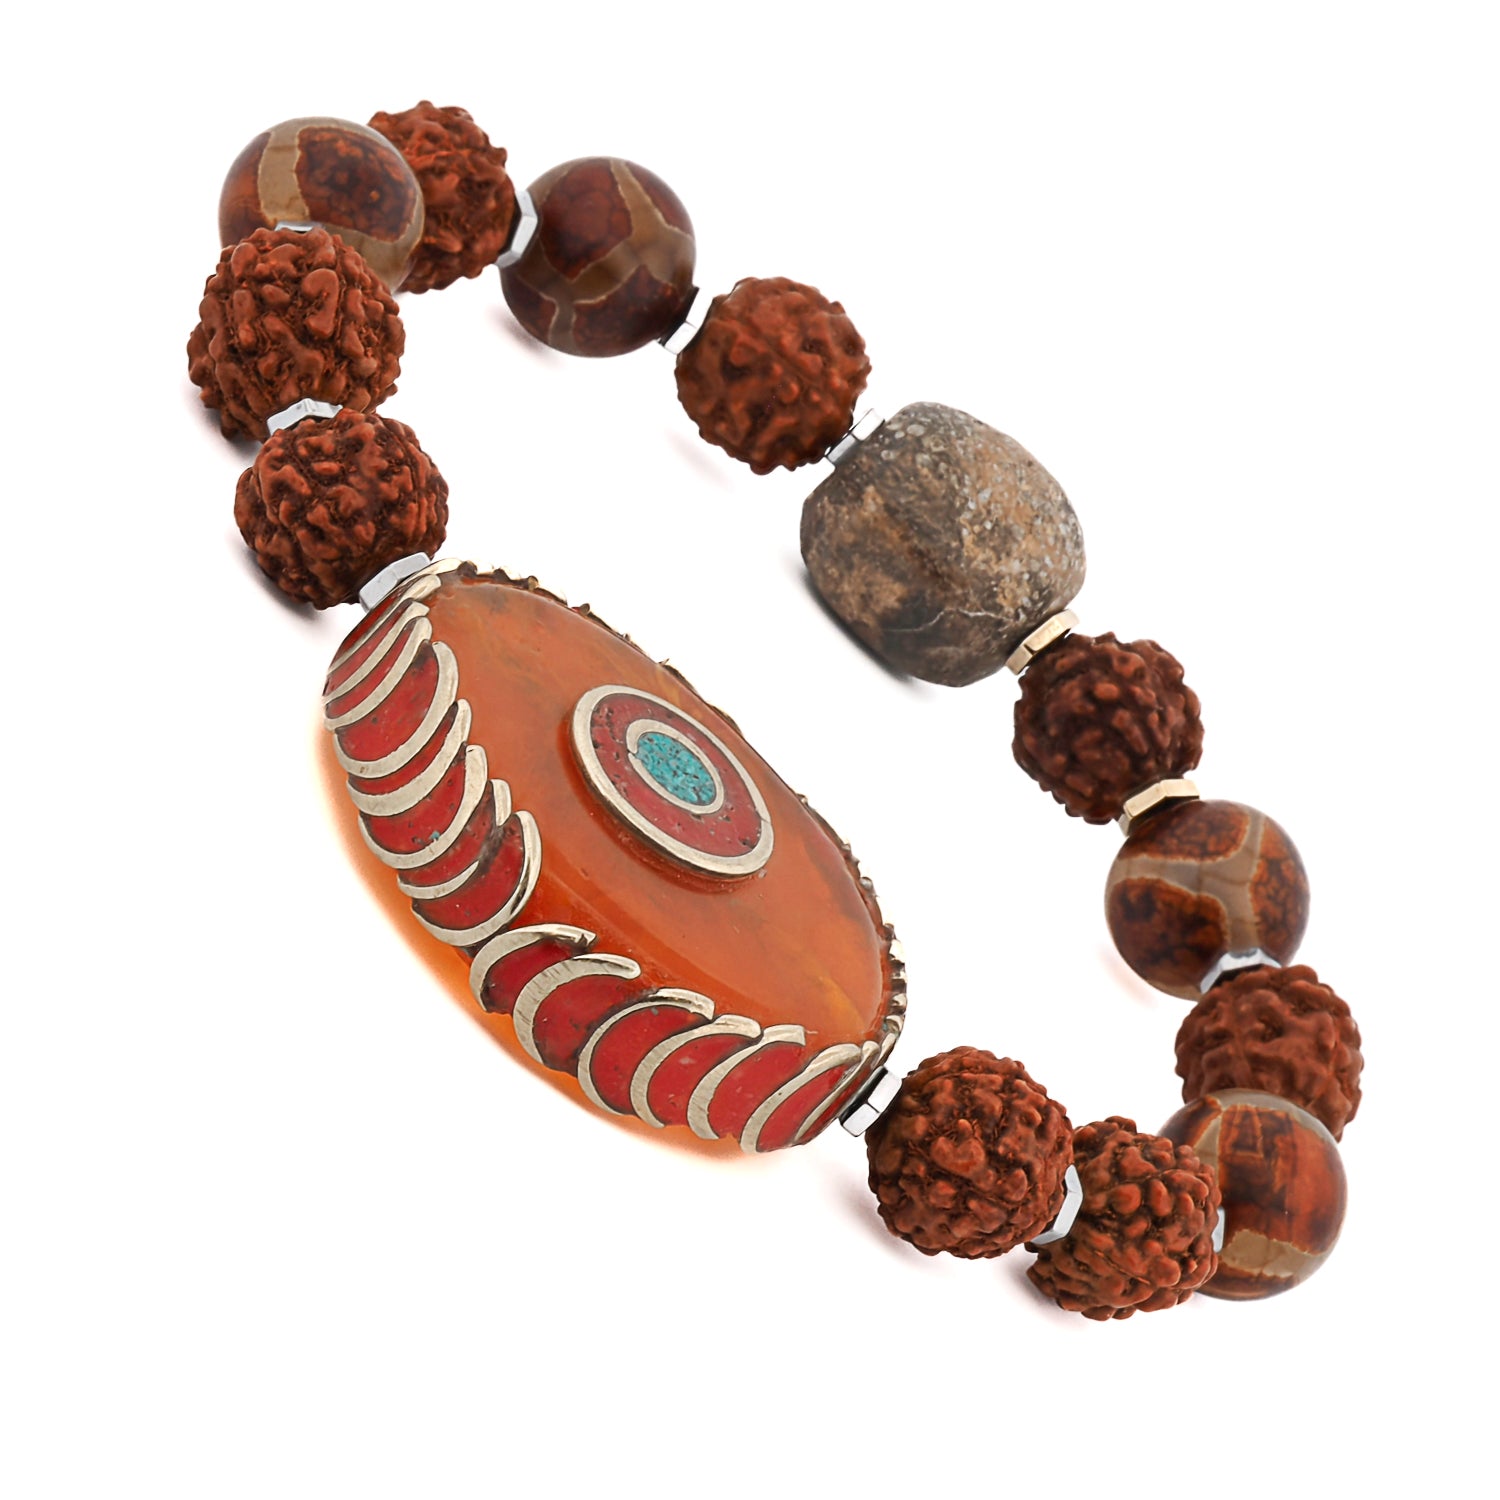 Prayer Beads Rudraksha Meditation Mala Bracelet